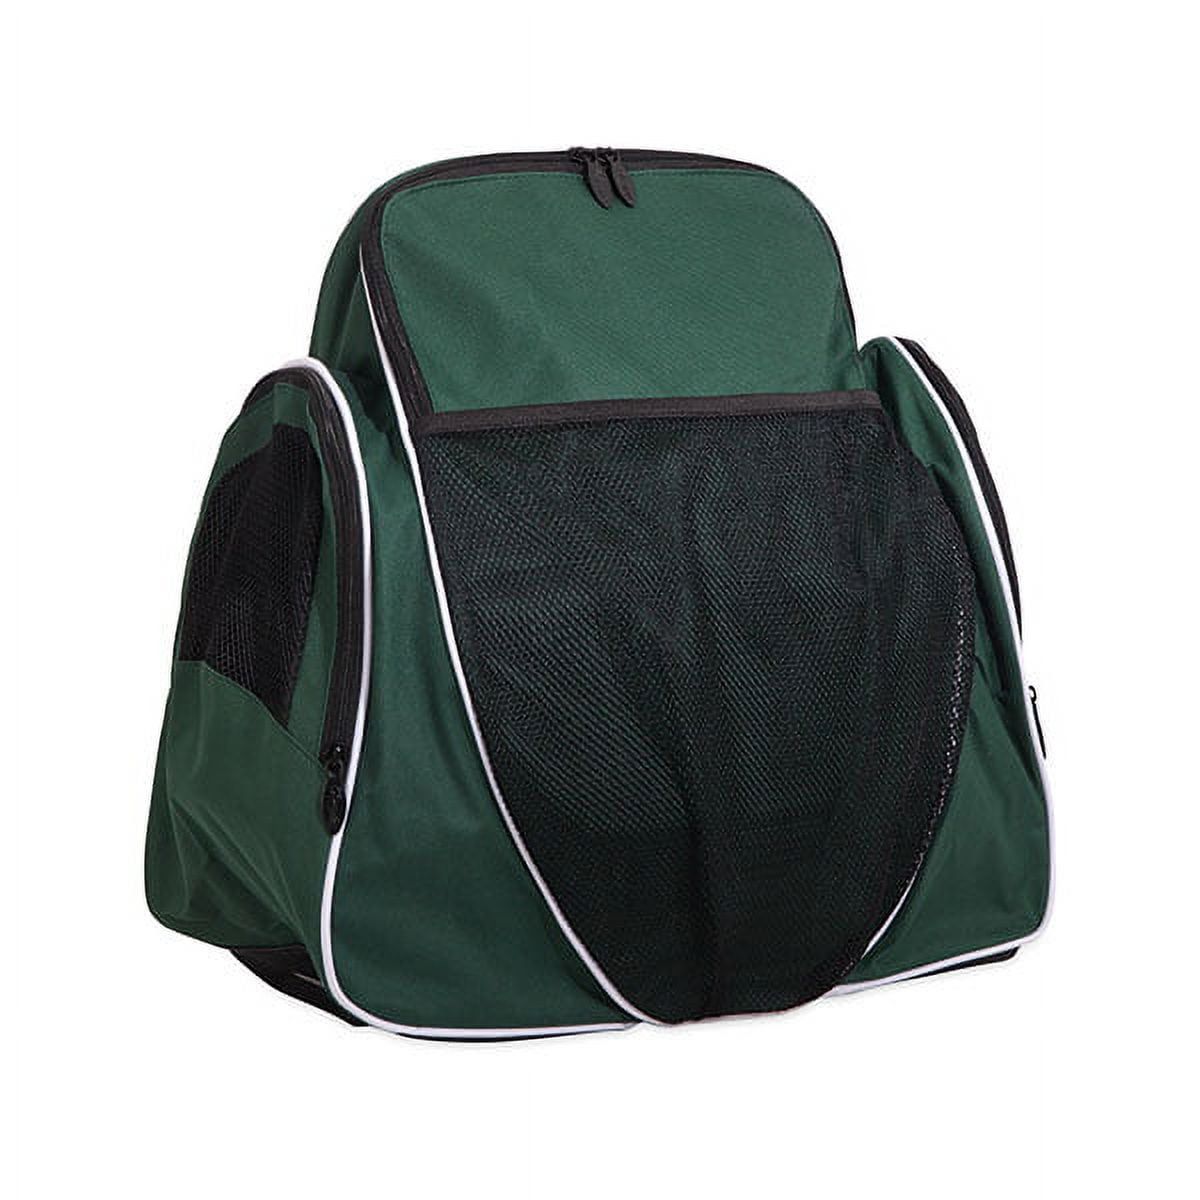 Bp1810dg 18 X 19 X 10 In. Deluxe All Purpose Backpack, Dark Green